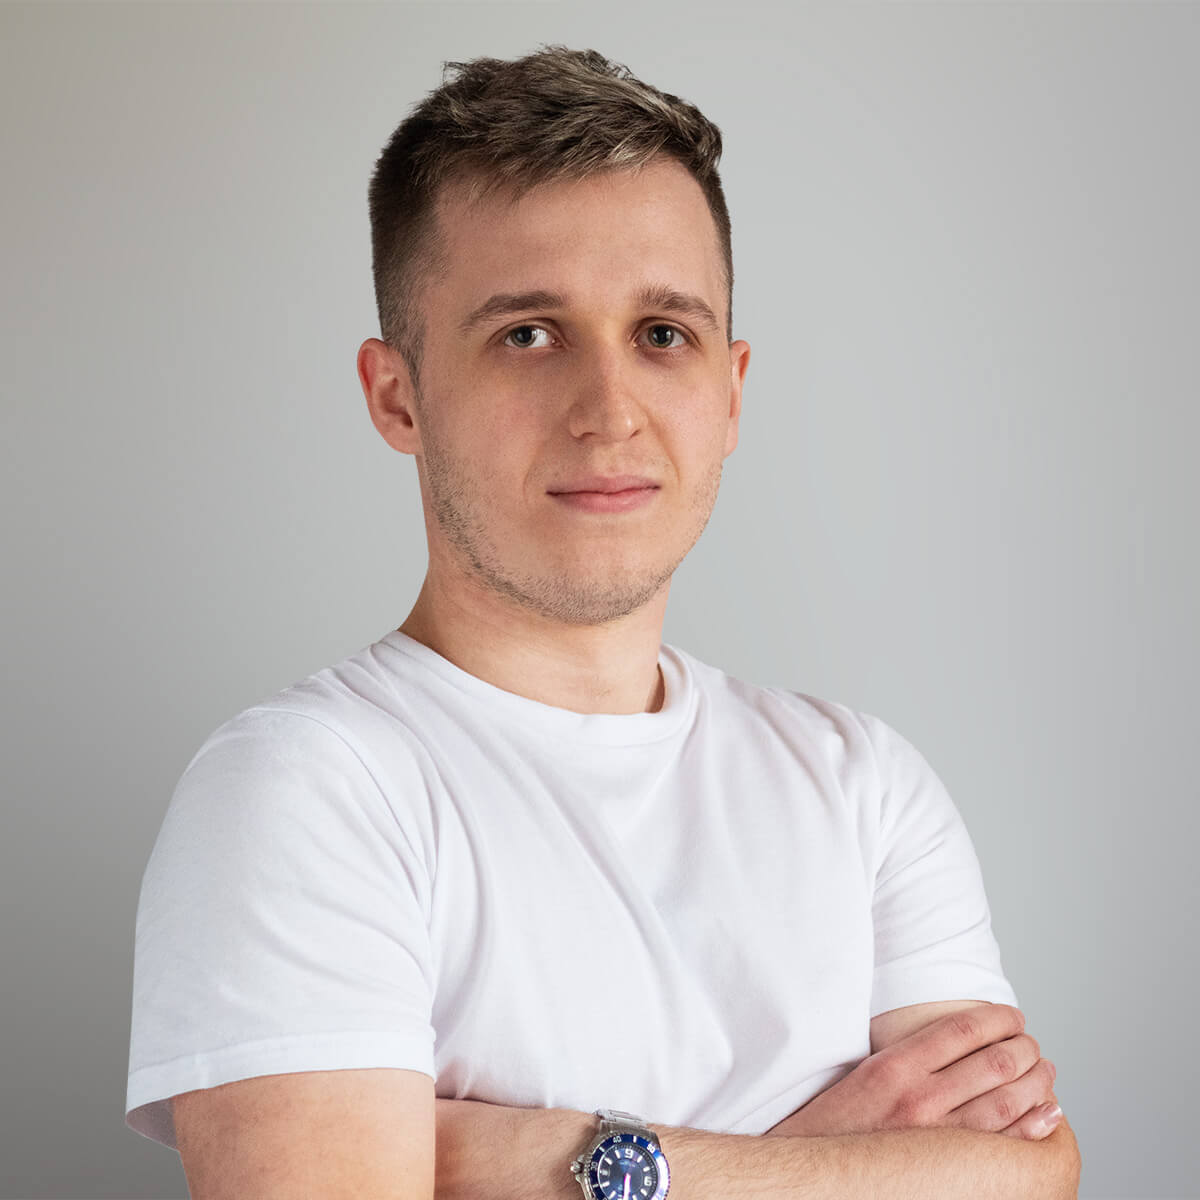 Grzegorz biernacki forex investing in cryptocurrency tokens